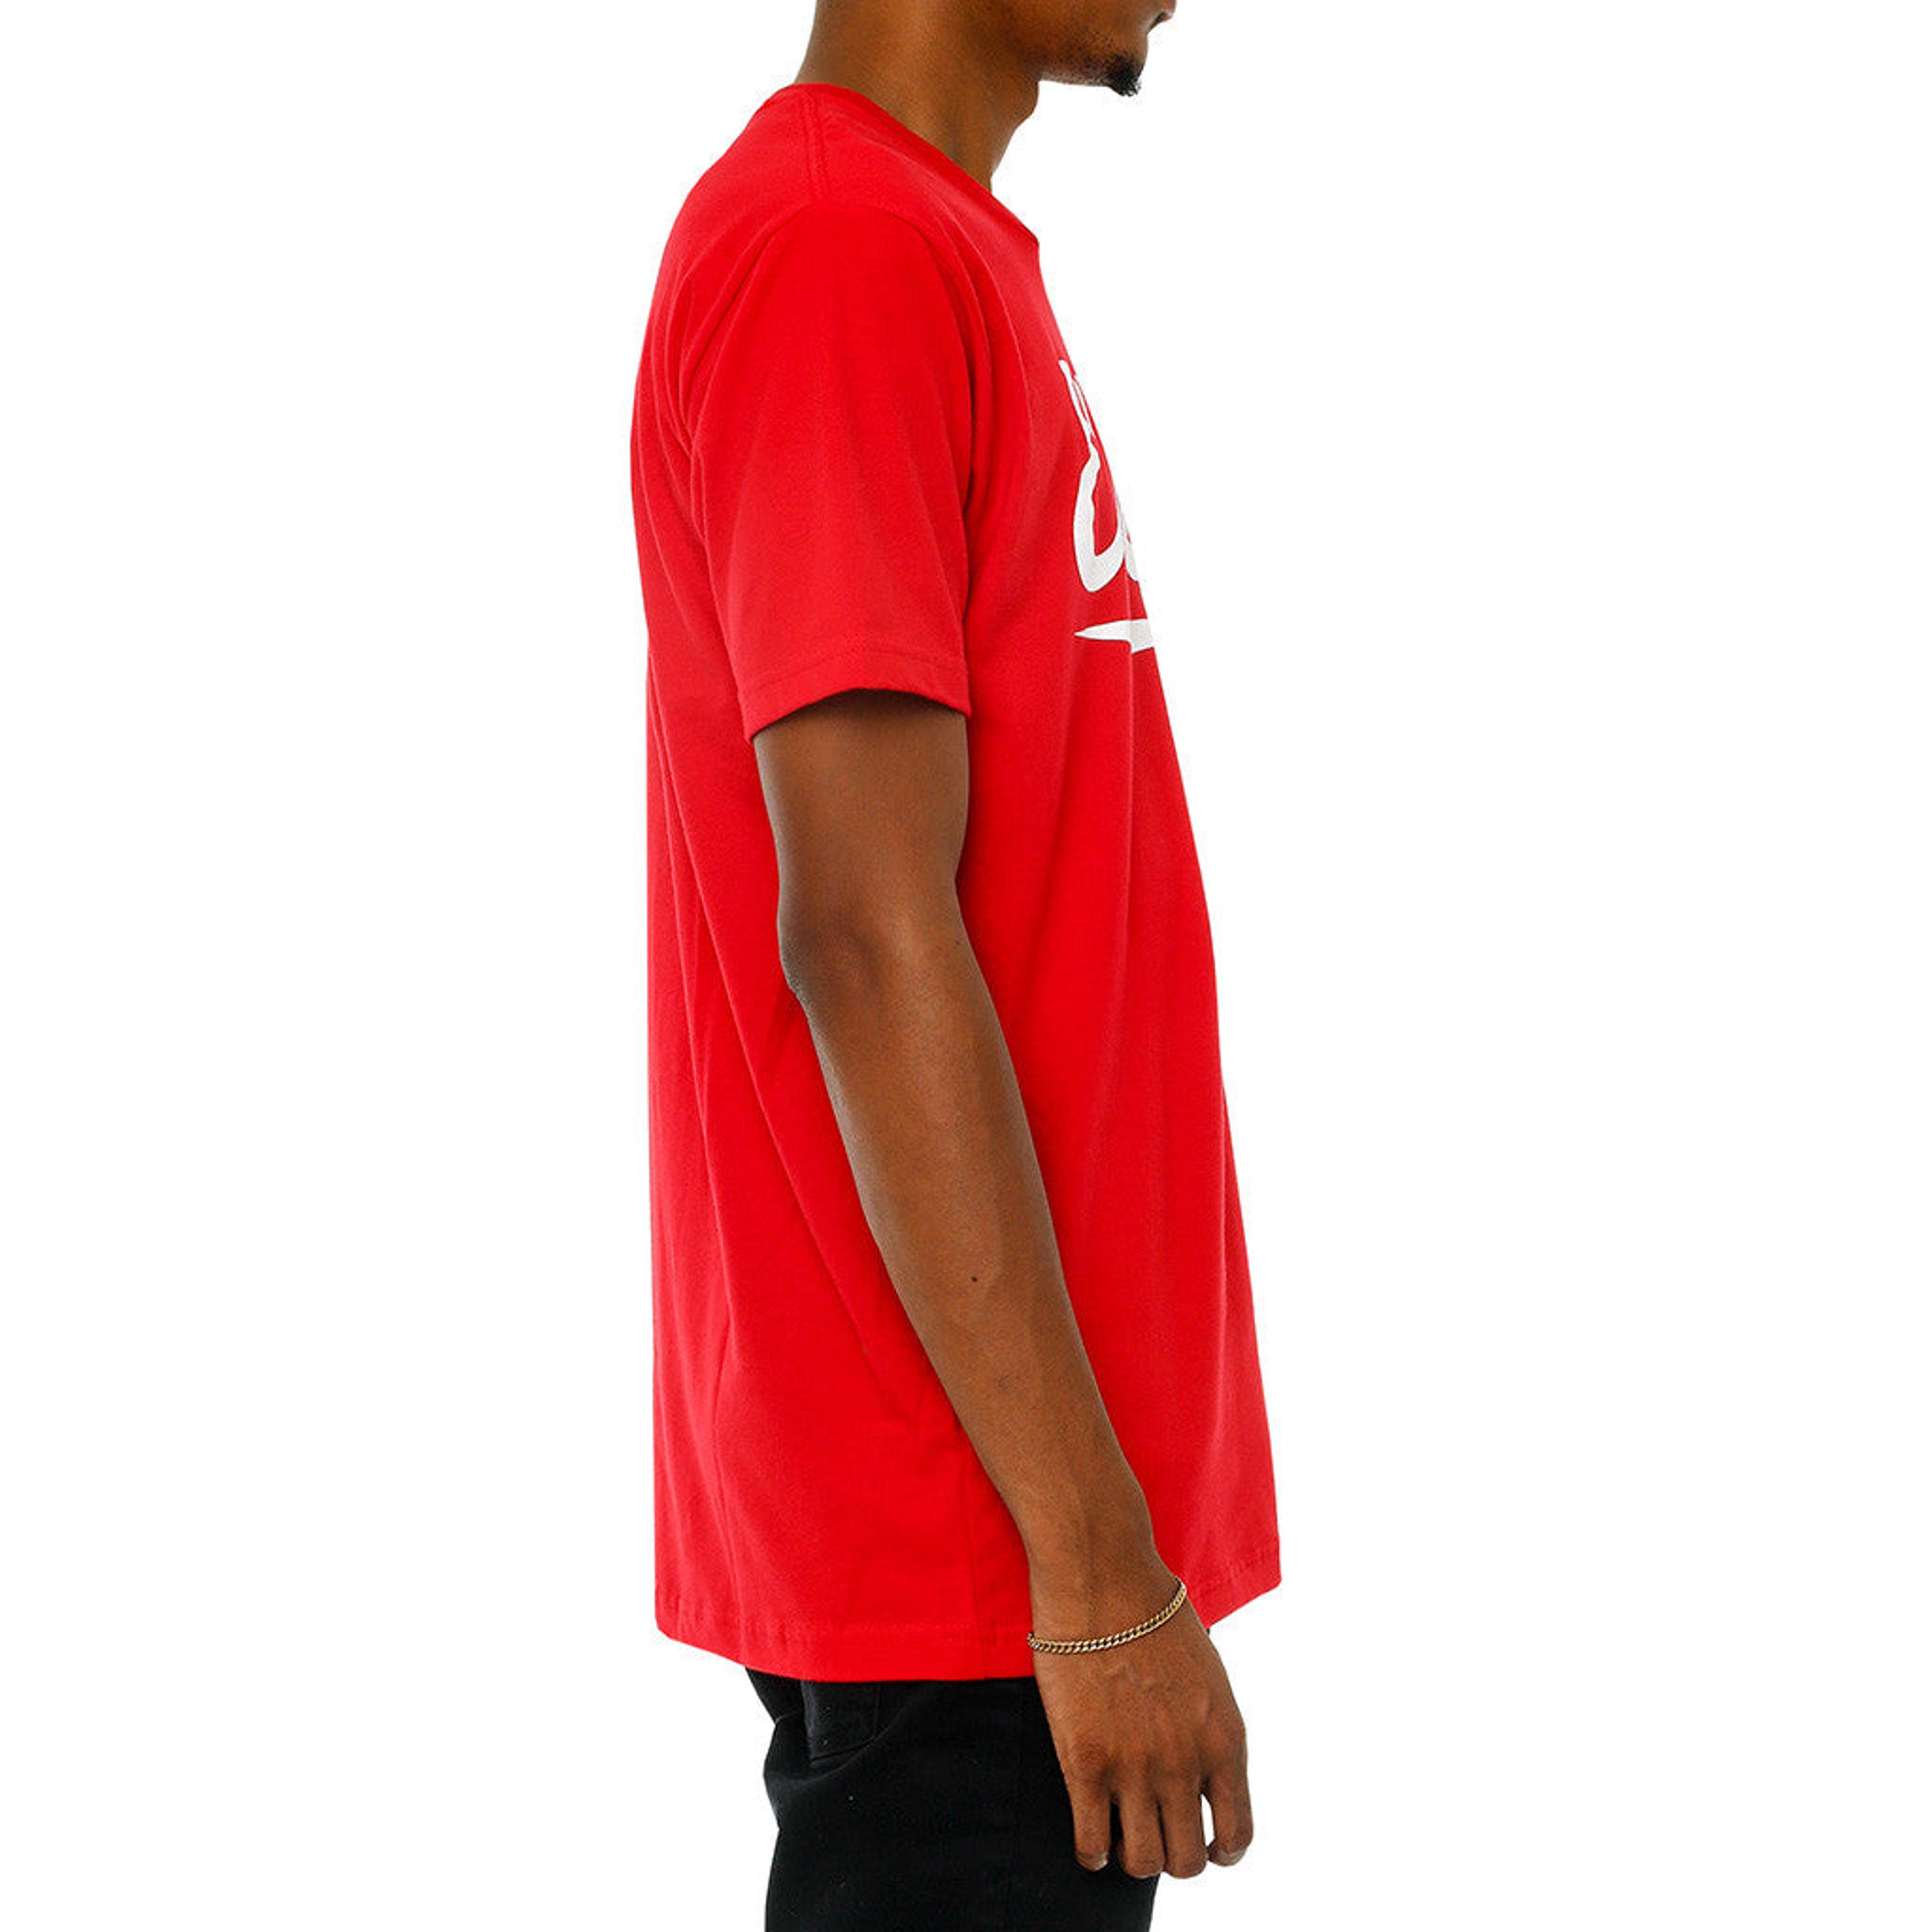 Alternate View 2 of Ewing Athletics Script Red T-Shirt